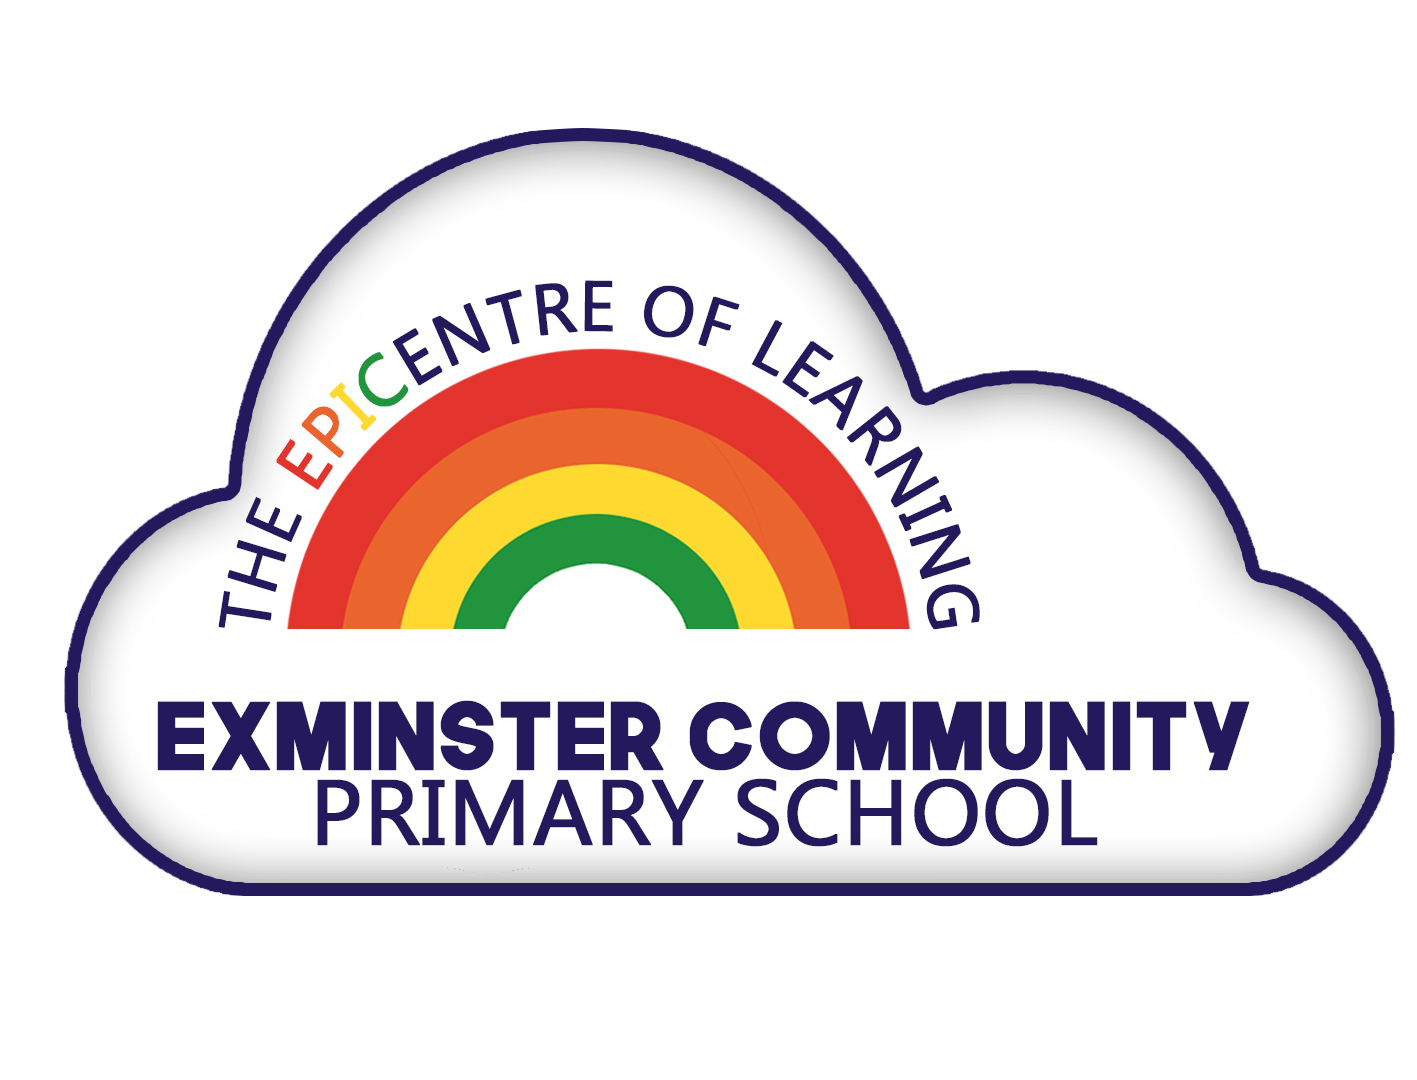 Exminster Community Primary School